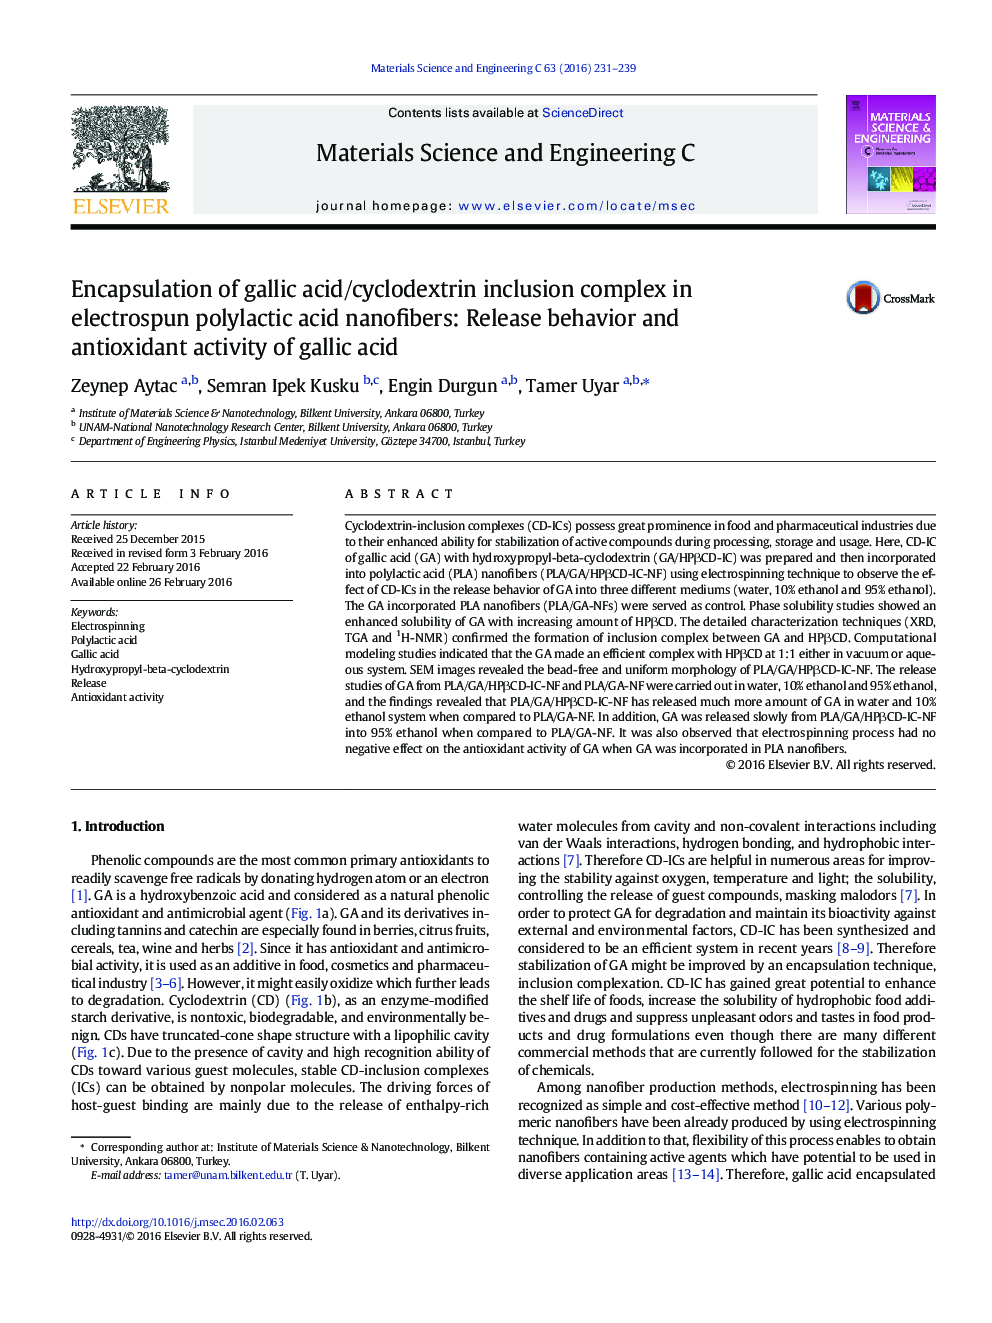 Encapsulation of gallic acid/cyclodextrin inclusion complex in electrospun polylactic acid nanofibers: Release behavior and antioxidant activity of gallic acid